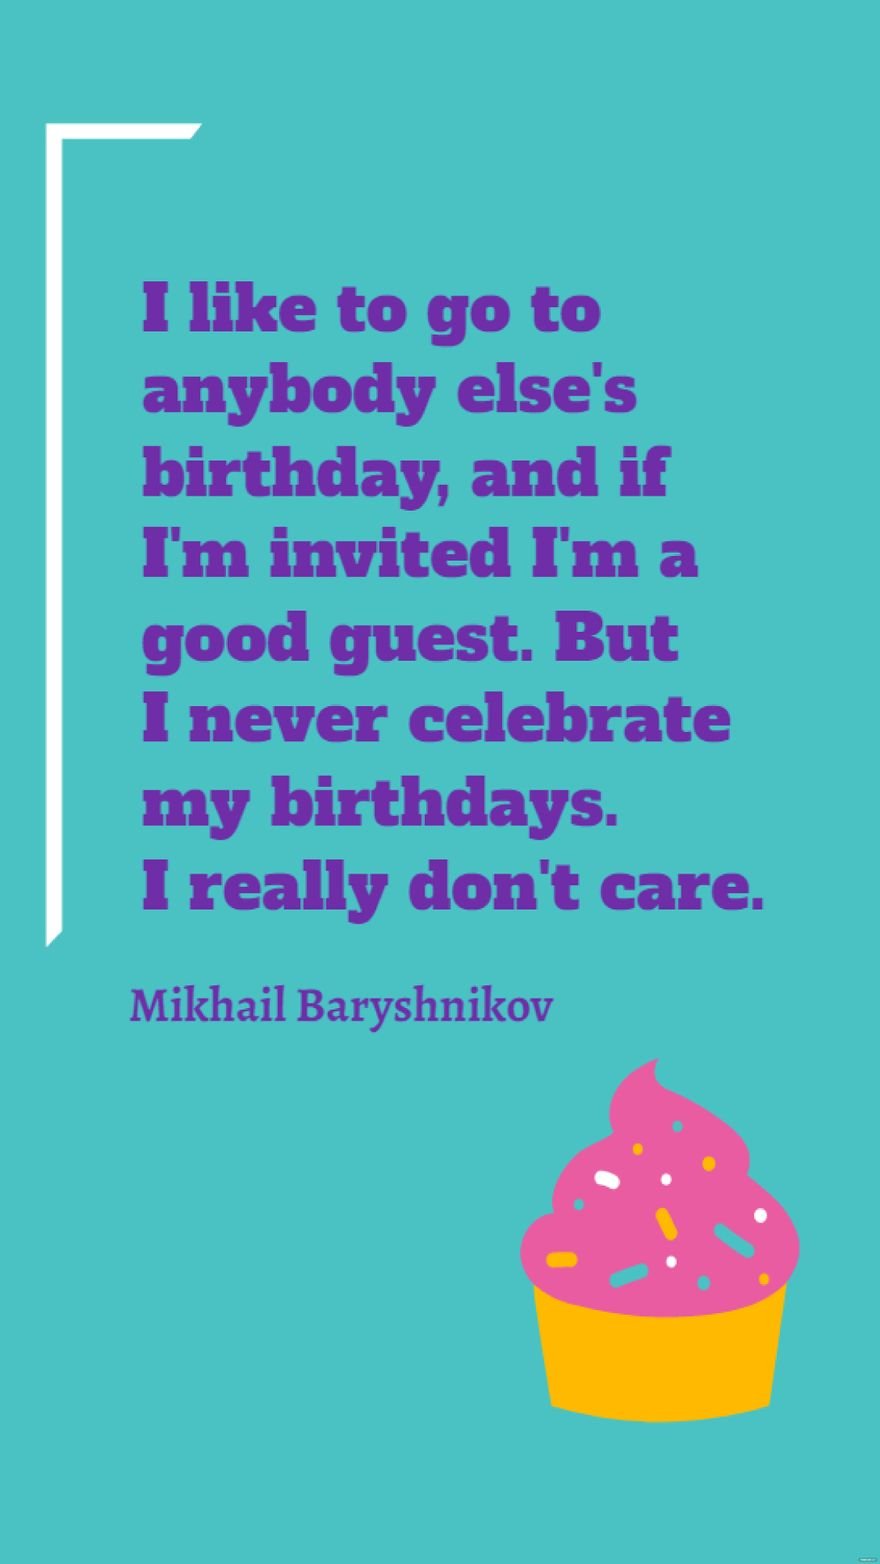 Free Mikhail Baryshnikov - I like to go to anybody else's birthday, and if I'm invited I'm a good guest. But I never celebrate my birthdays. I really don't care.